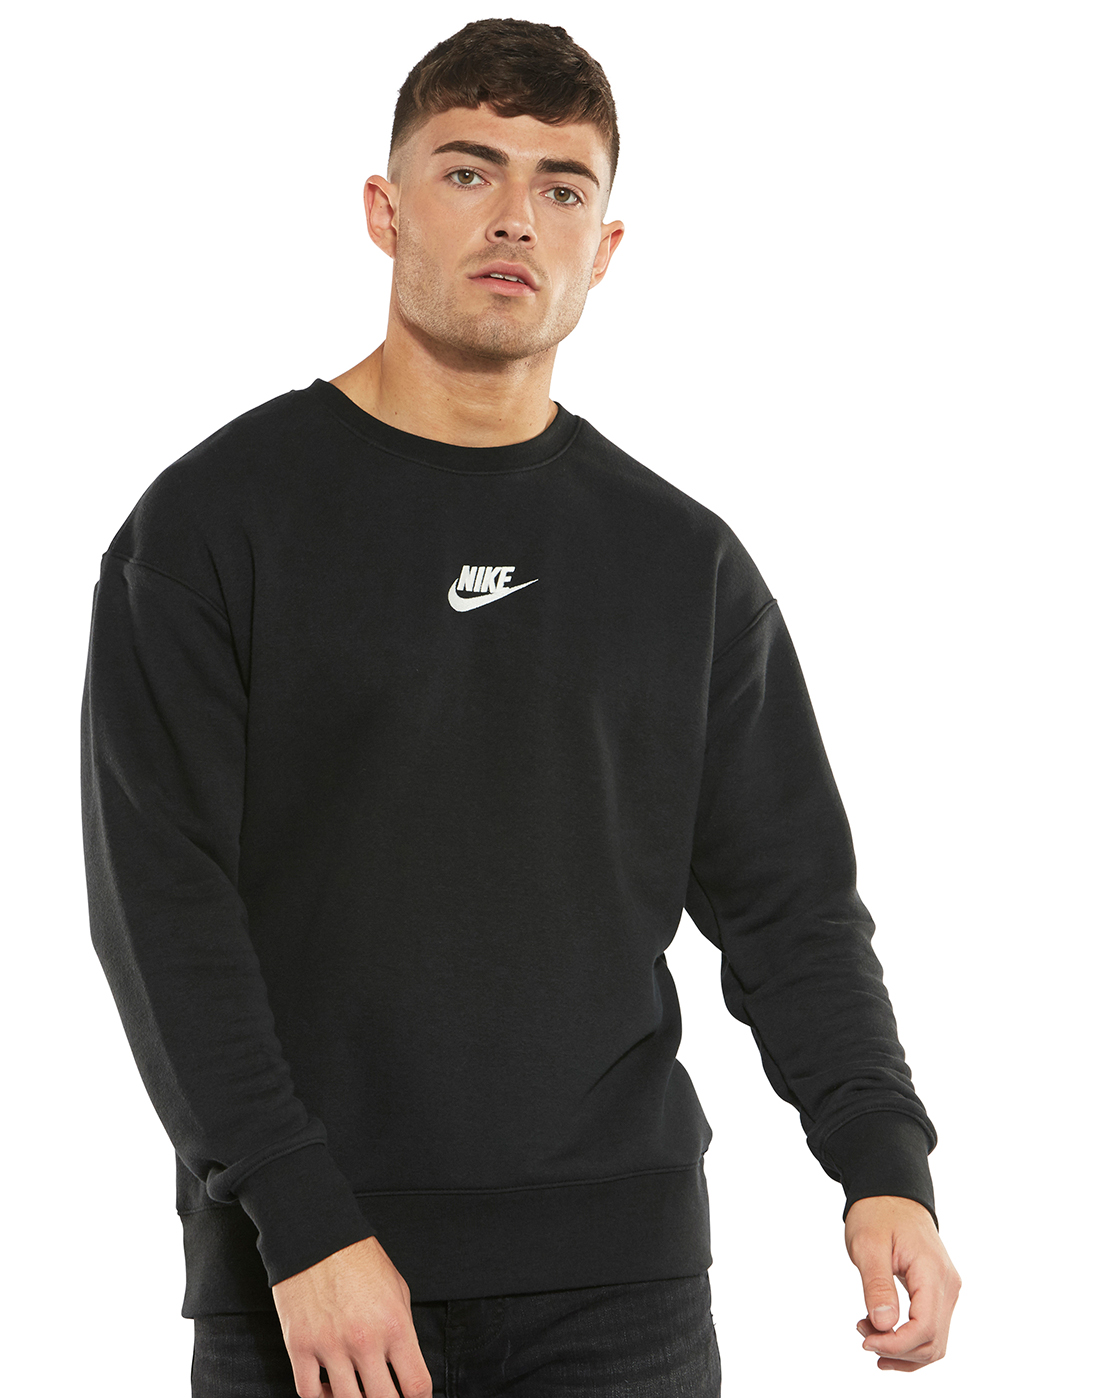 Nike Mens Heritage Crew Sweatshirt | Life Style Sports